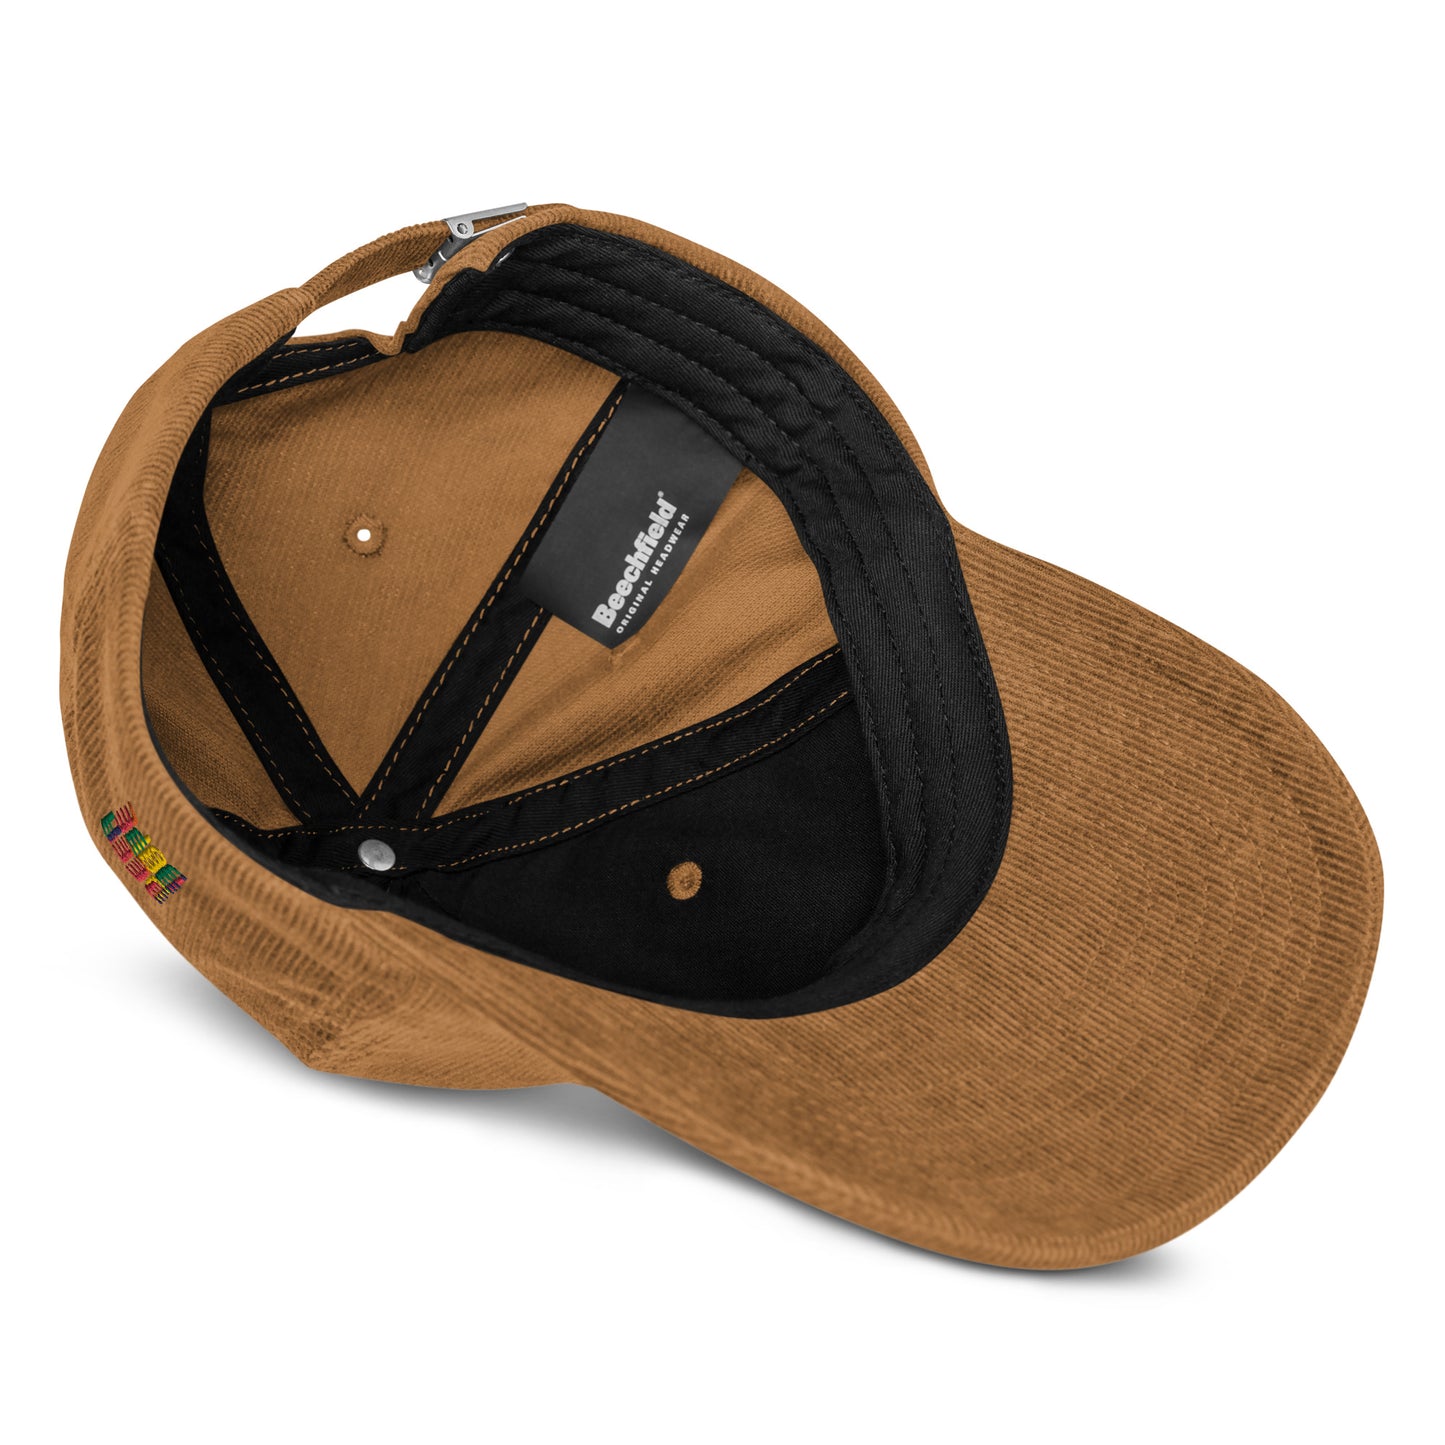 Hillside 96' | Strapback Corduroy hat